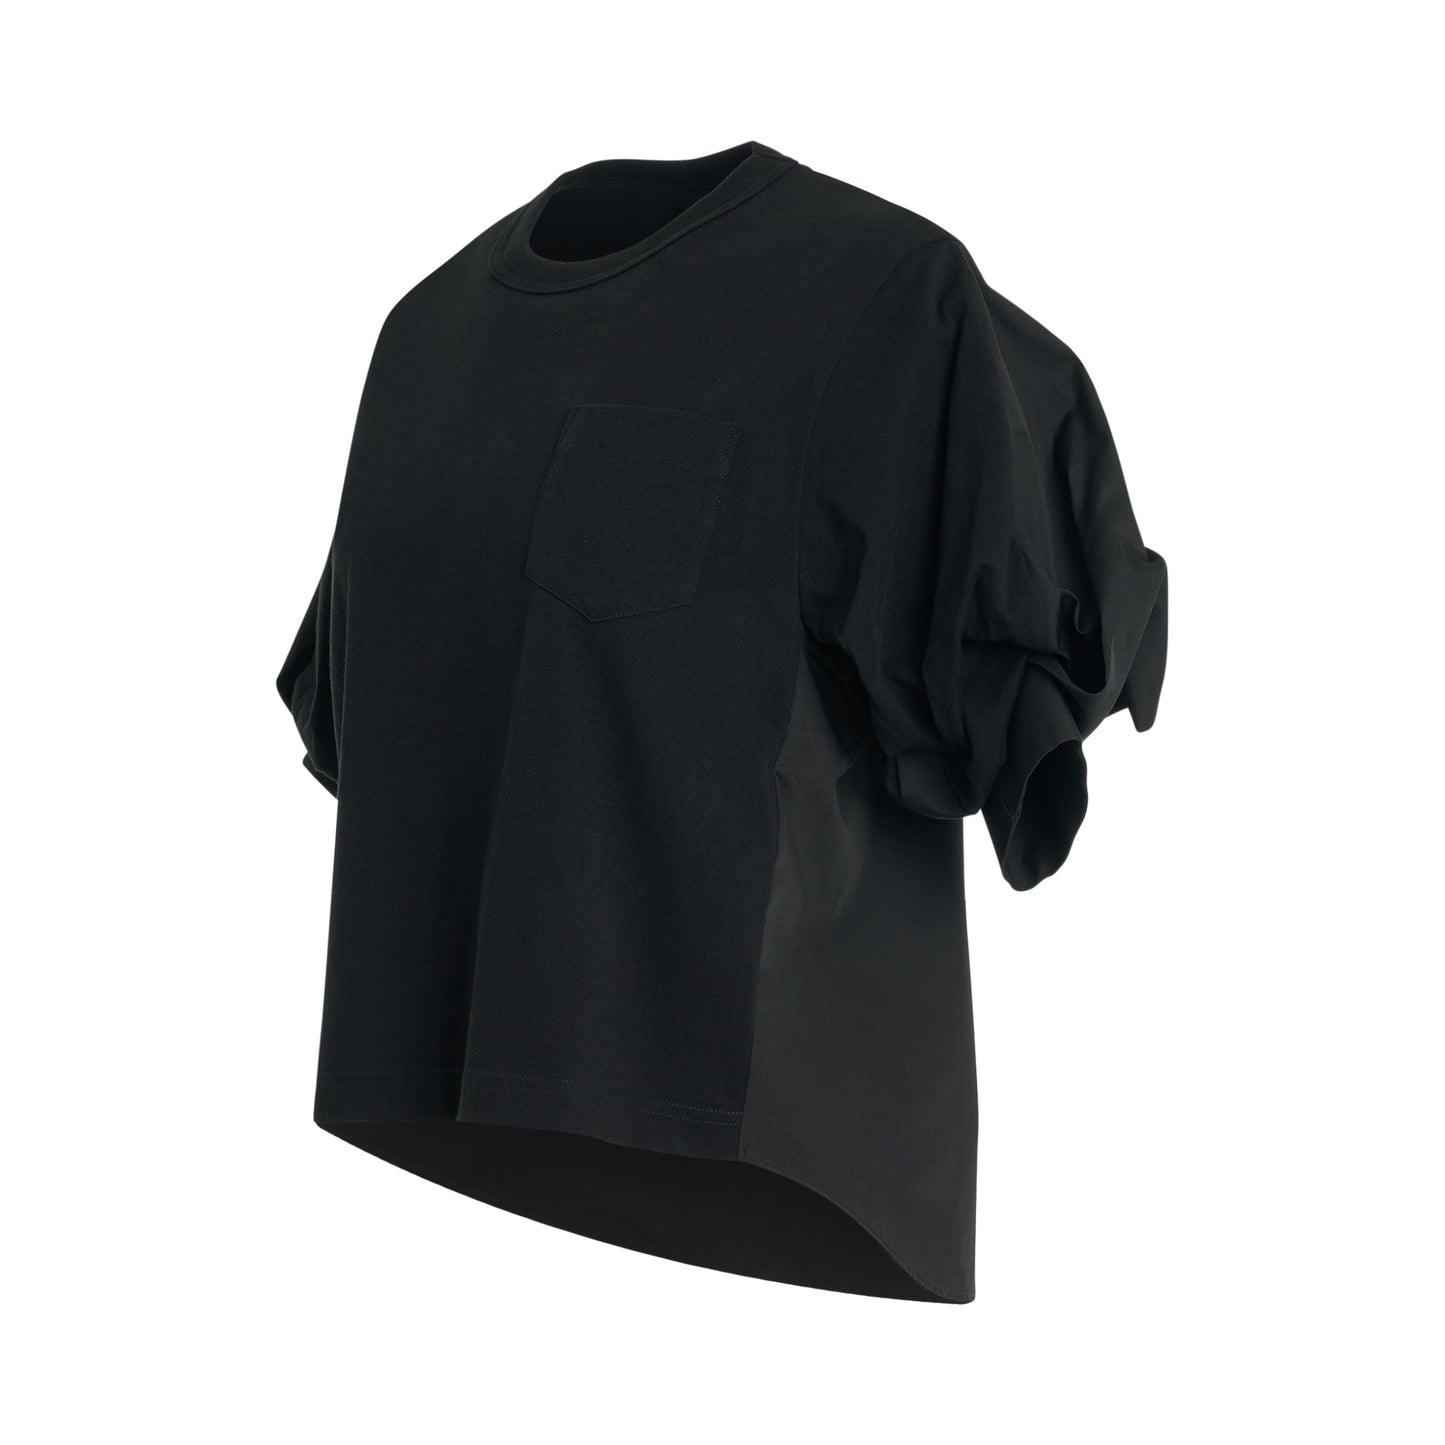 Cotton Poplin x Cotton Jersey T-Shirt in Black